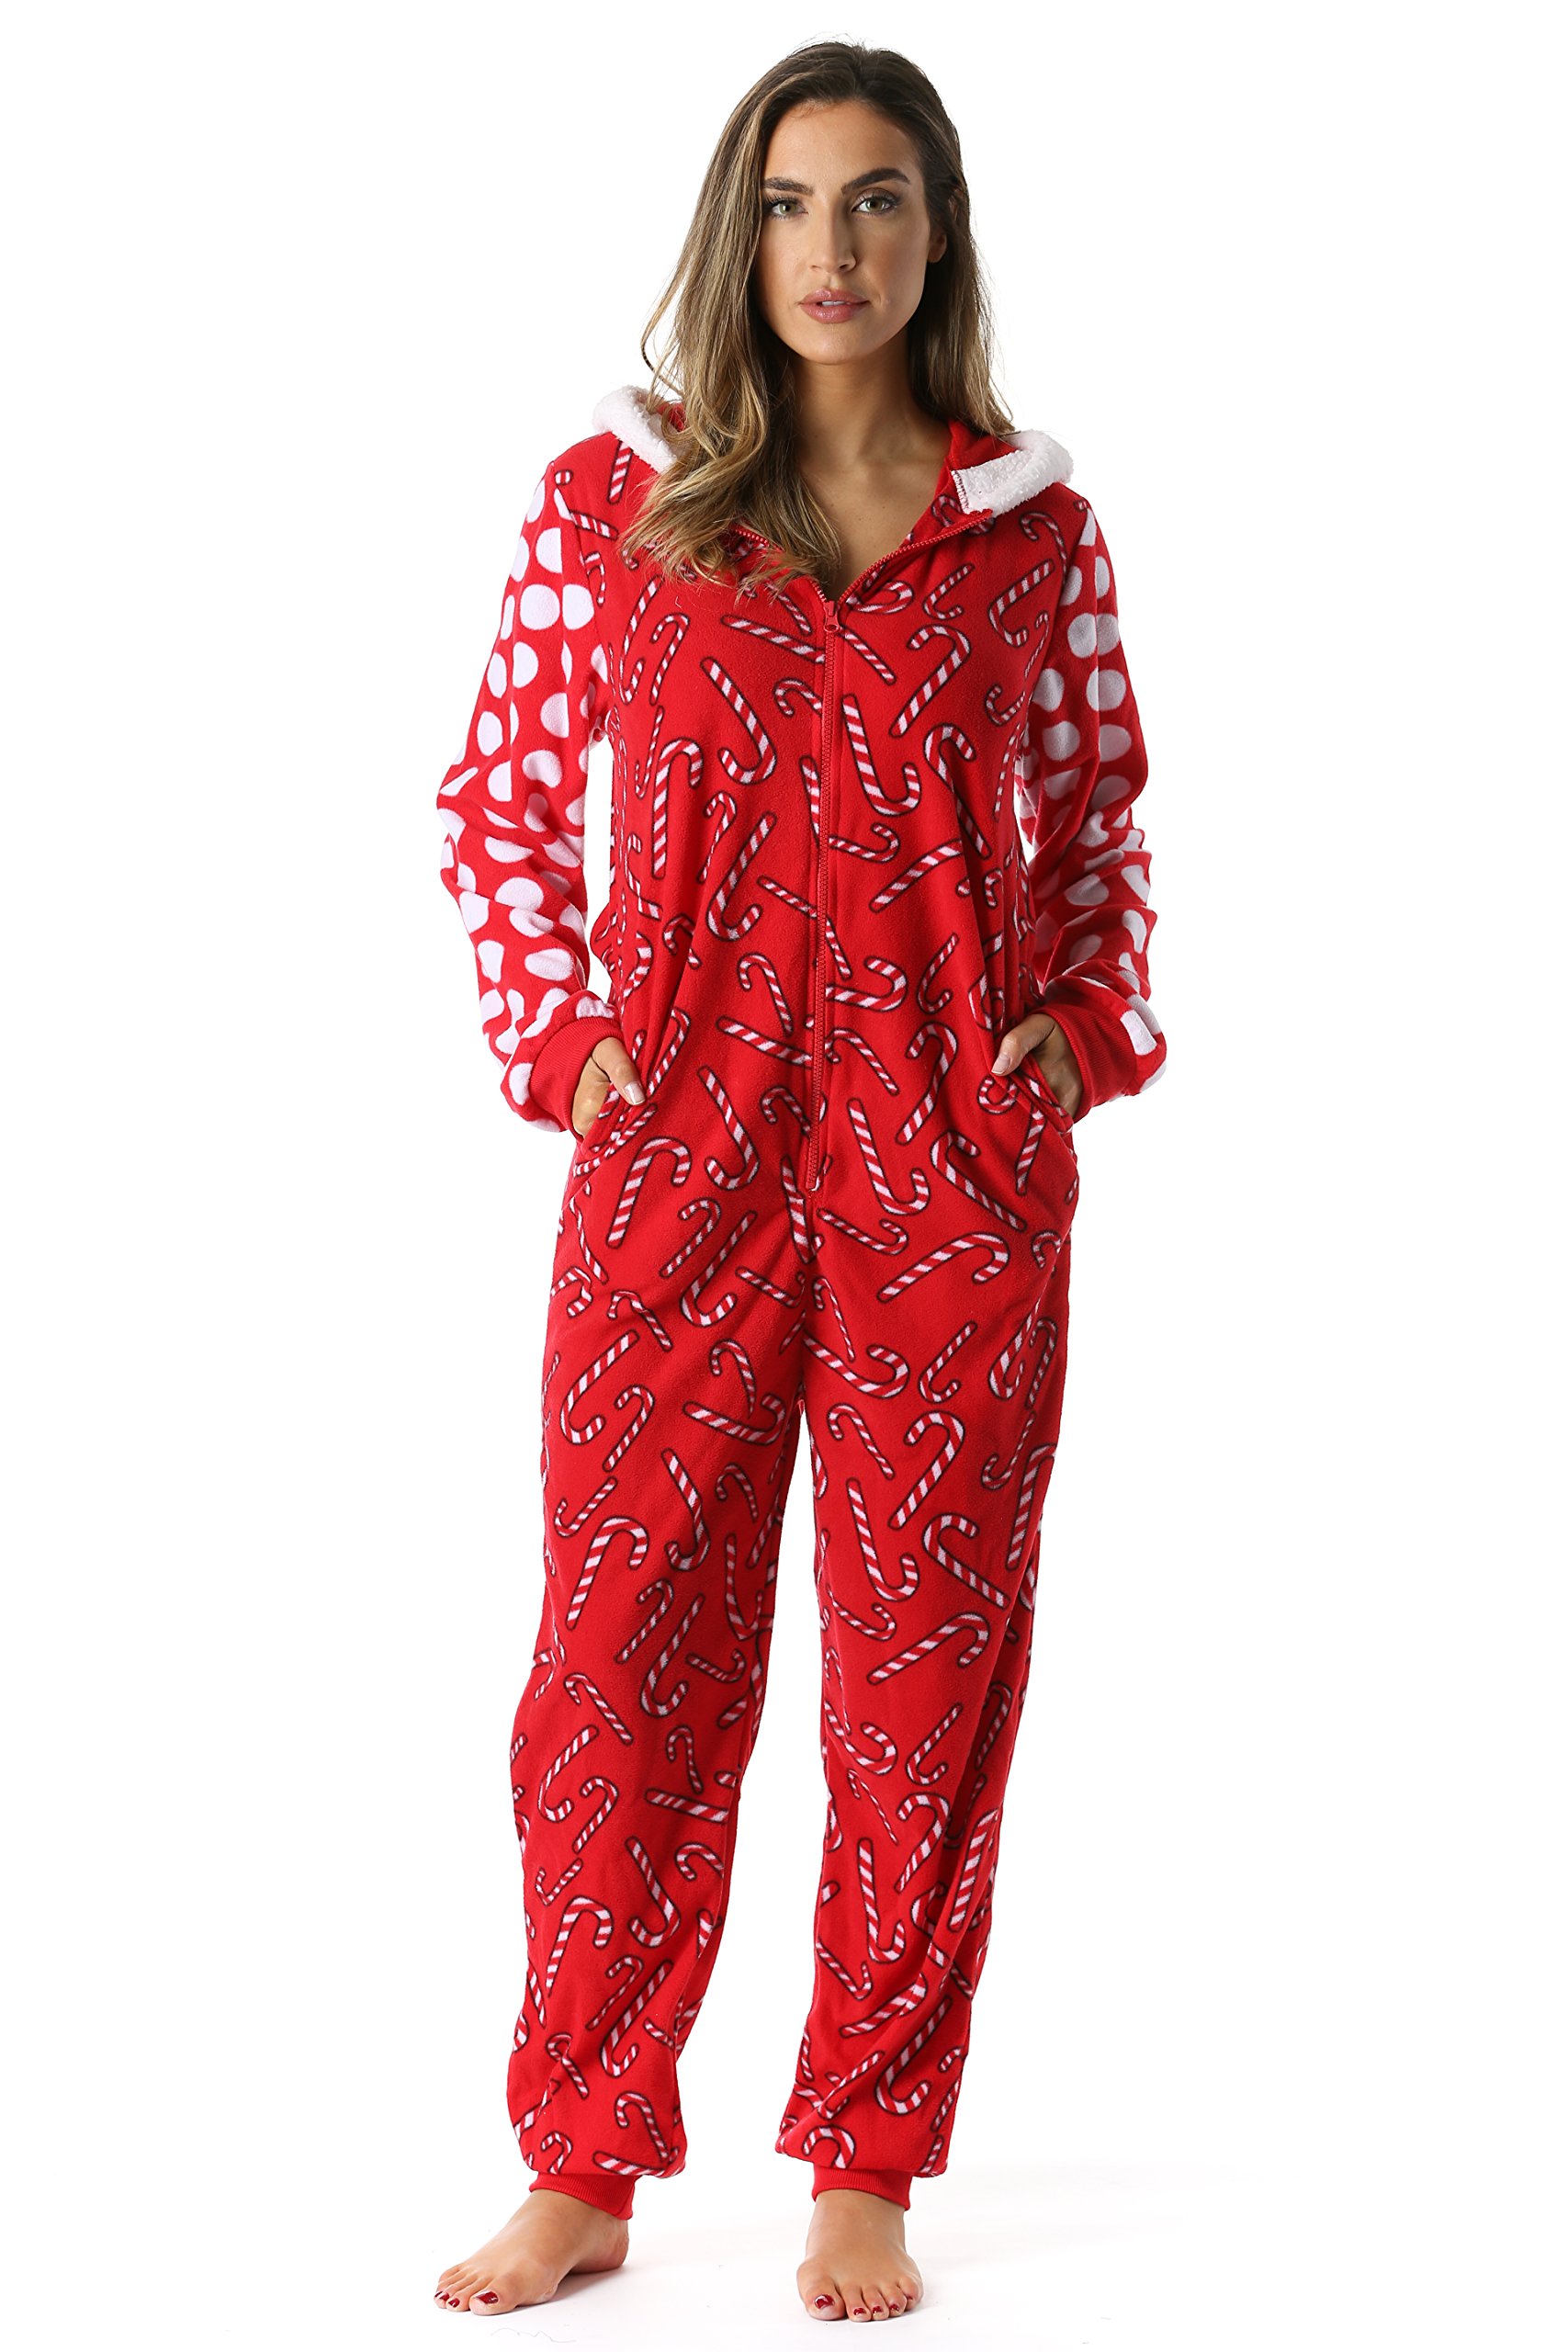 #followme Adult Christmas Onesie for Women Jumpsuit One-Piece Pajamas